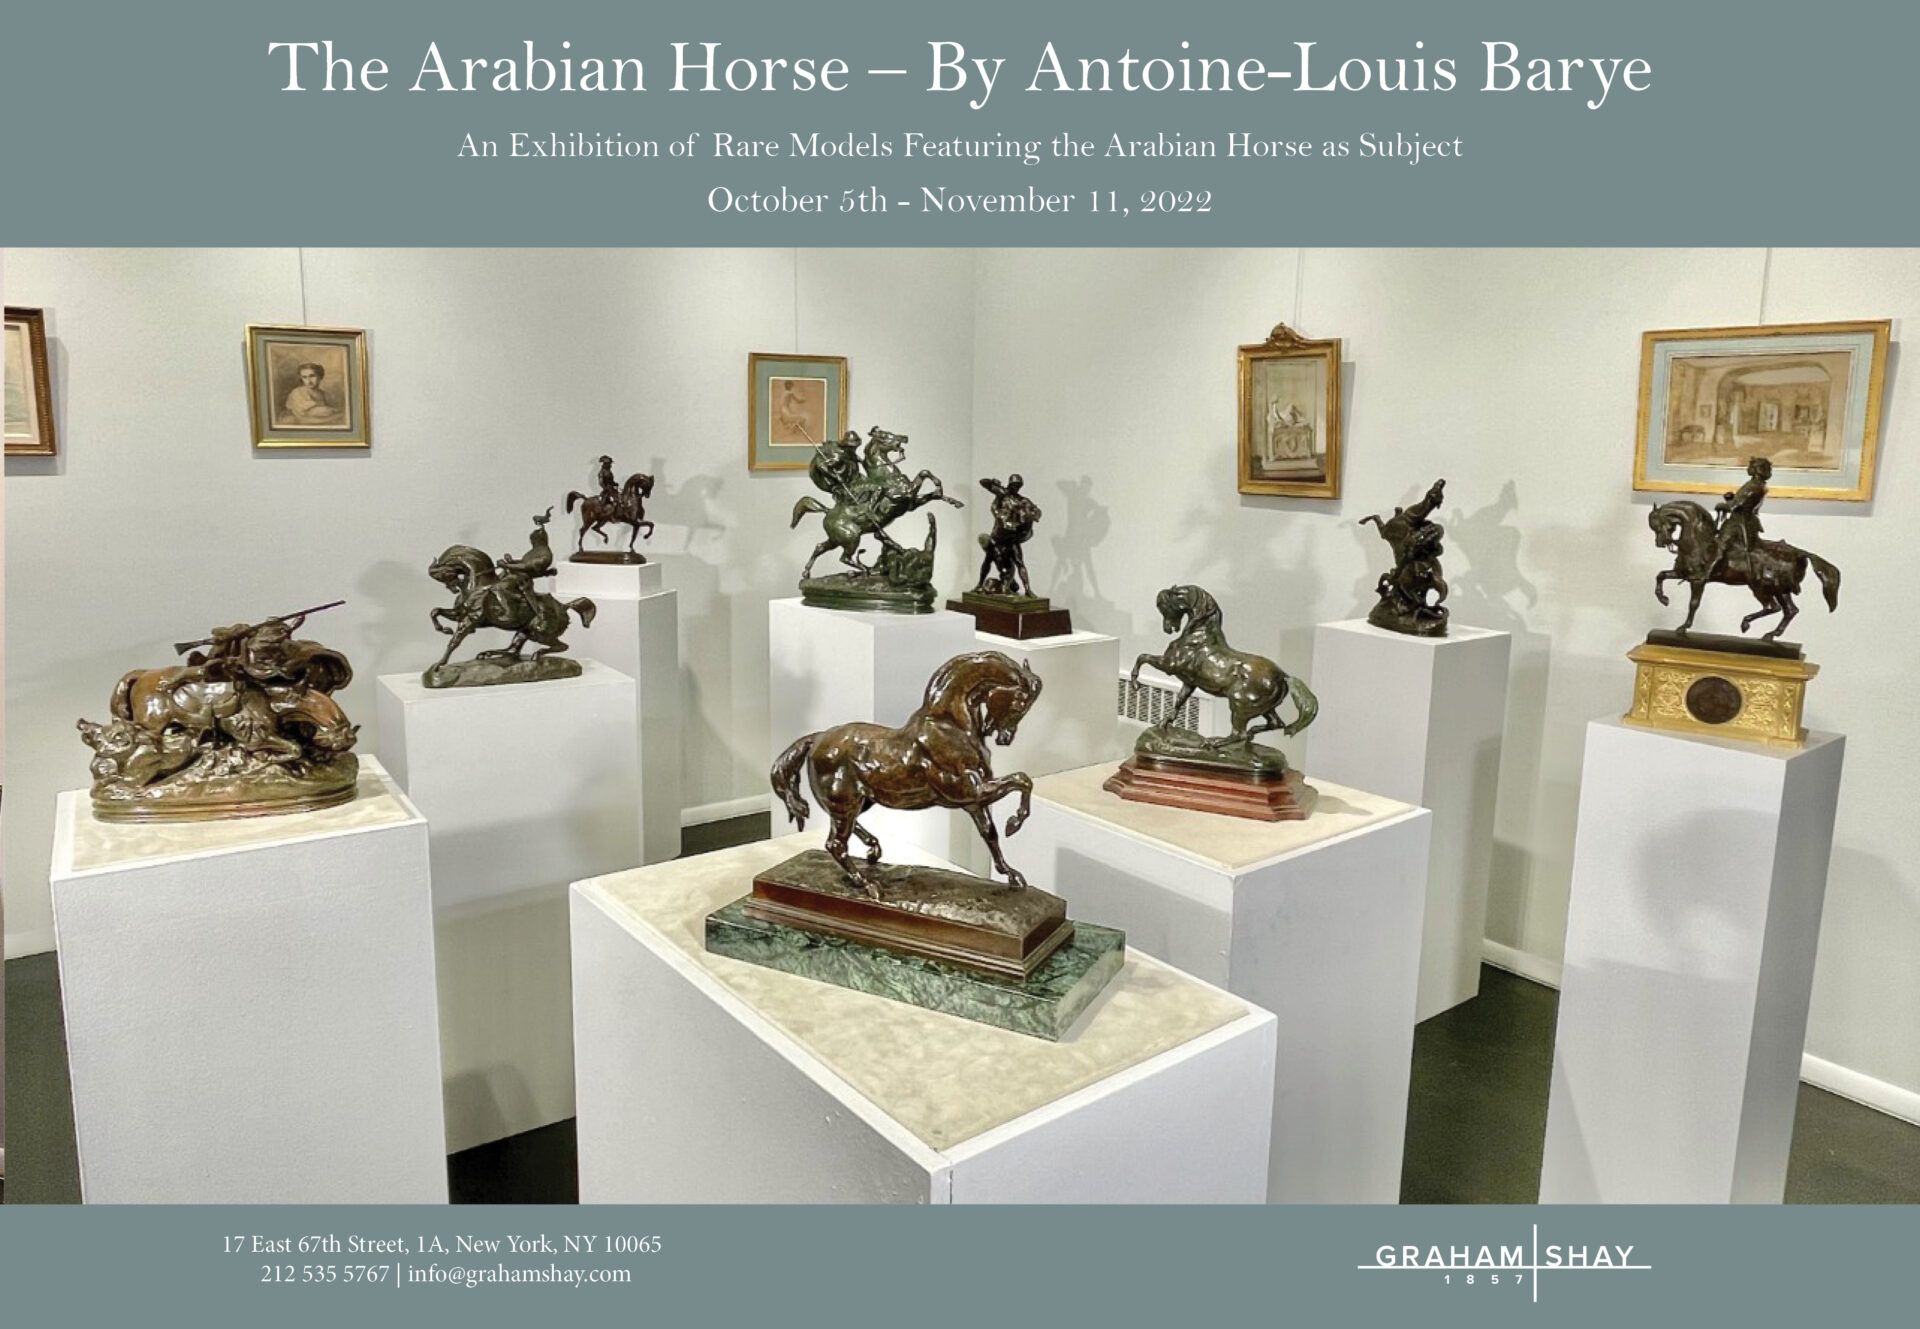 Alt text: The Arabian Horse by Antoine-Louis Barye exhibition flyer